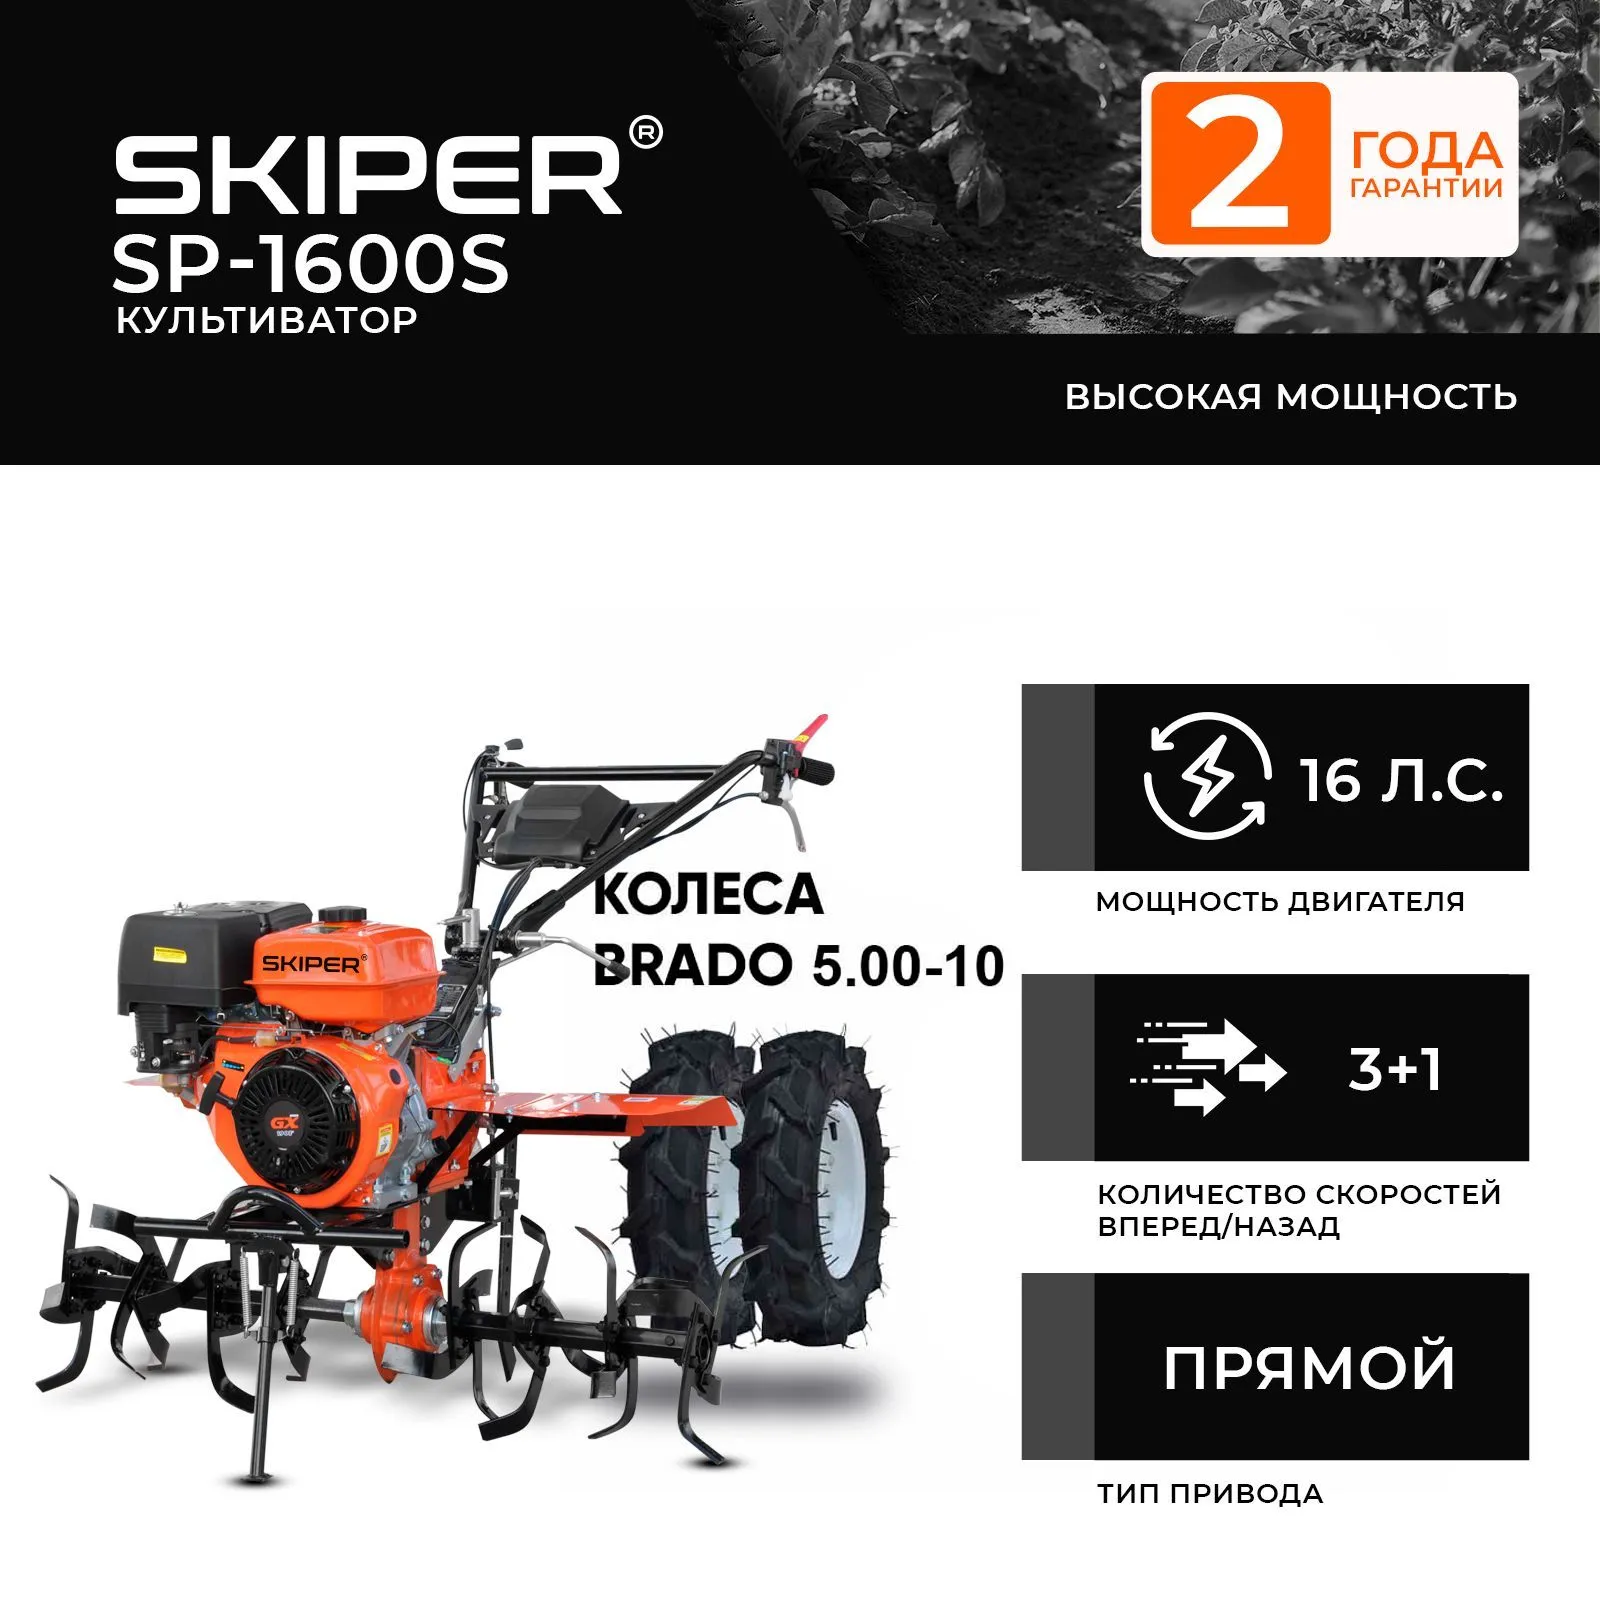 Skiper SP-1600S + колеса Brado 5.00-10 (2000290710014)